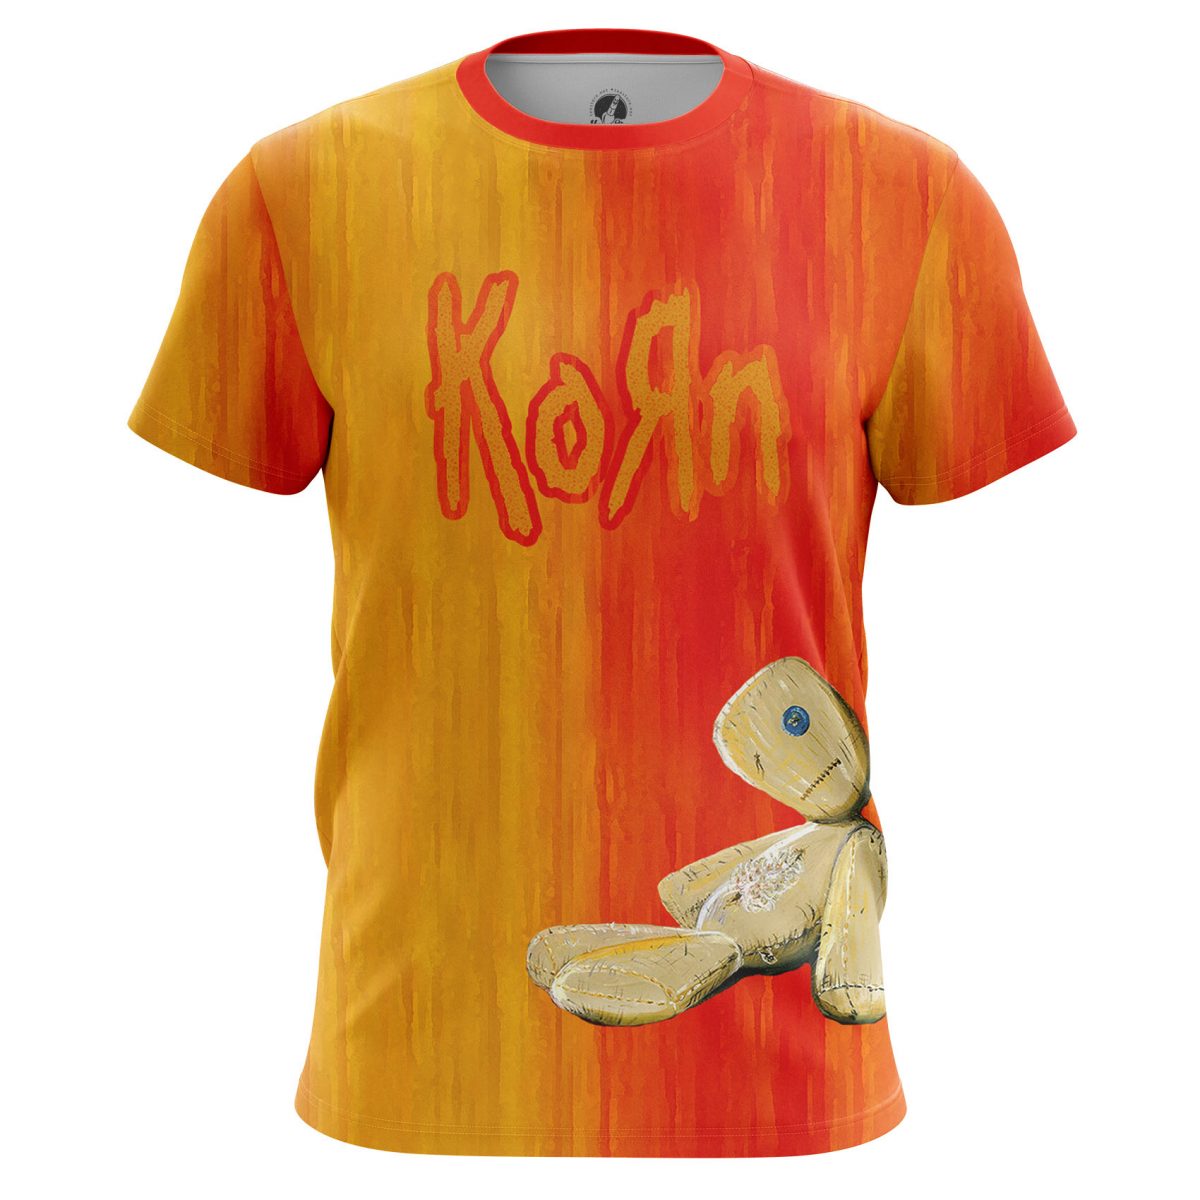 korn issues t shirt